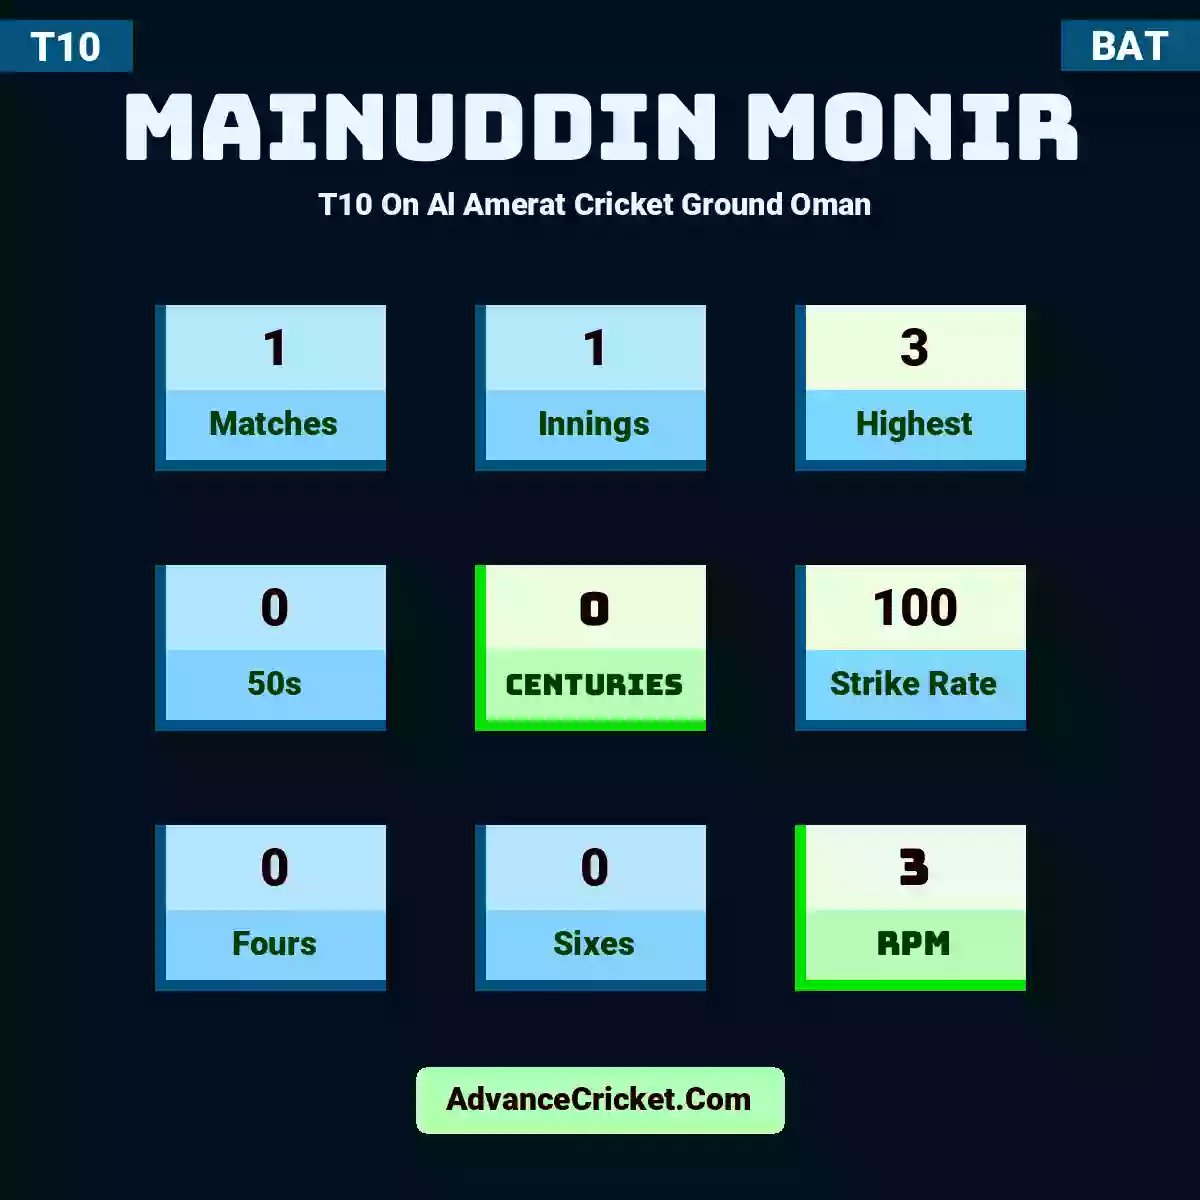 Mainuddin Monir T10  On Al Amerat Cricket Ground Oman , Mainuddin Monir played 1 matches, scored 3 runs as highest, 0 half-centuries, and 0 centuries, with a strike rate of 100. M.Monir hit 0 fours and 0 sixes, with an RPM of 3.